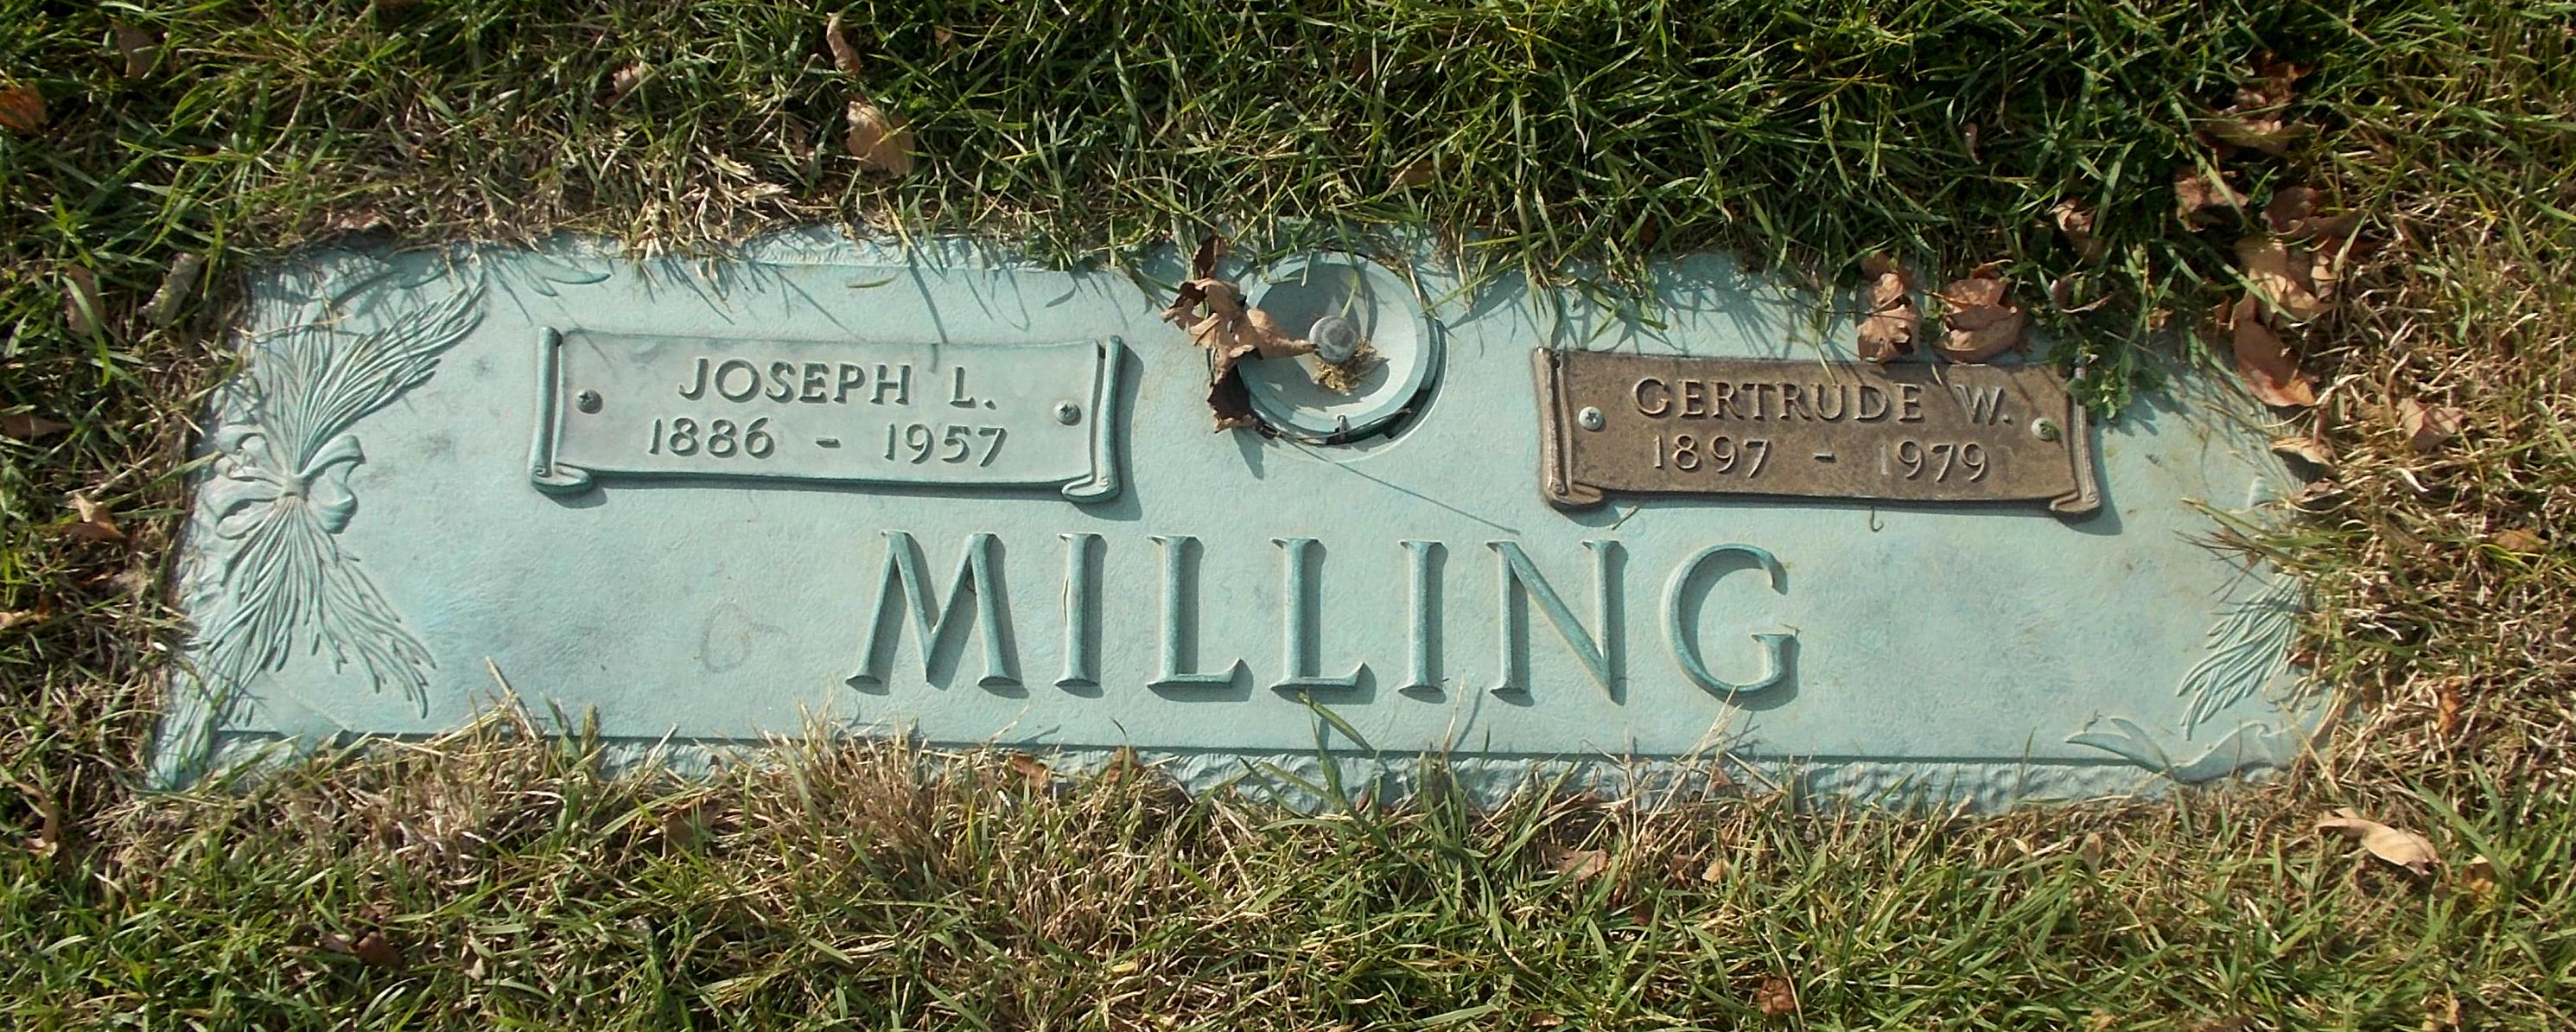 Gertrude W Milling